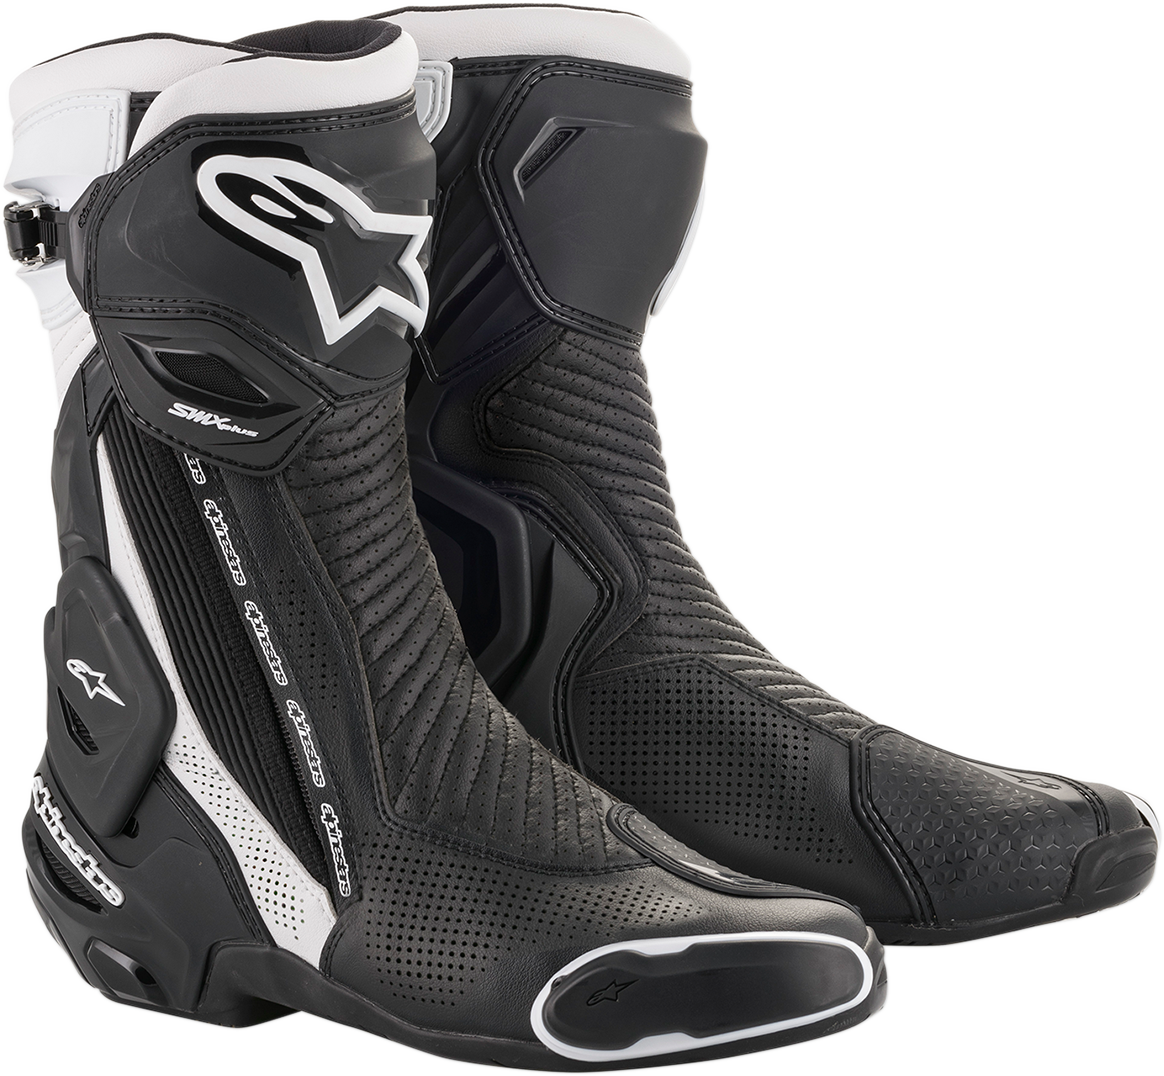 ALPINESTARS SMX+ Vented Boots - Black/White - US 7.5 / EU 41 2221119-12-41